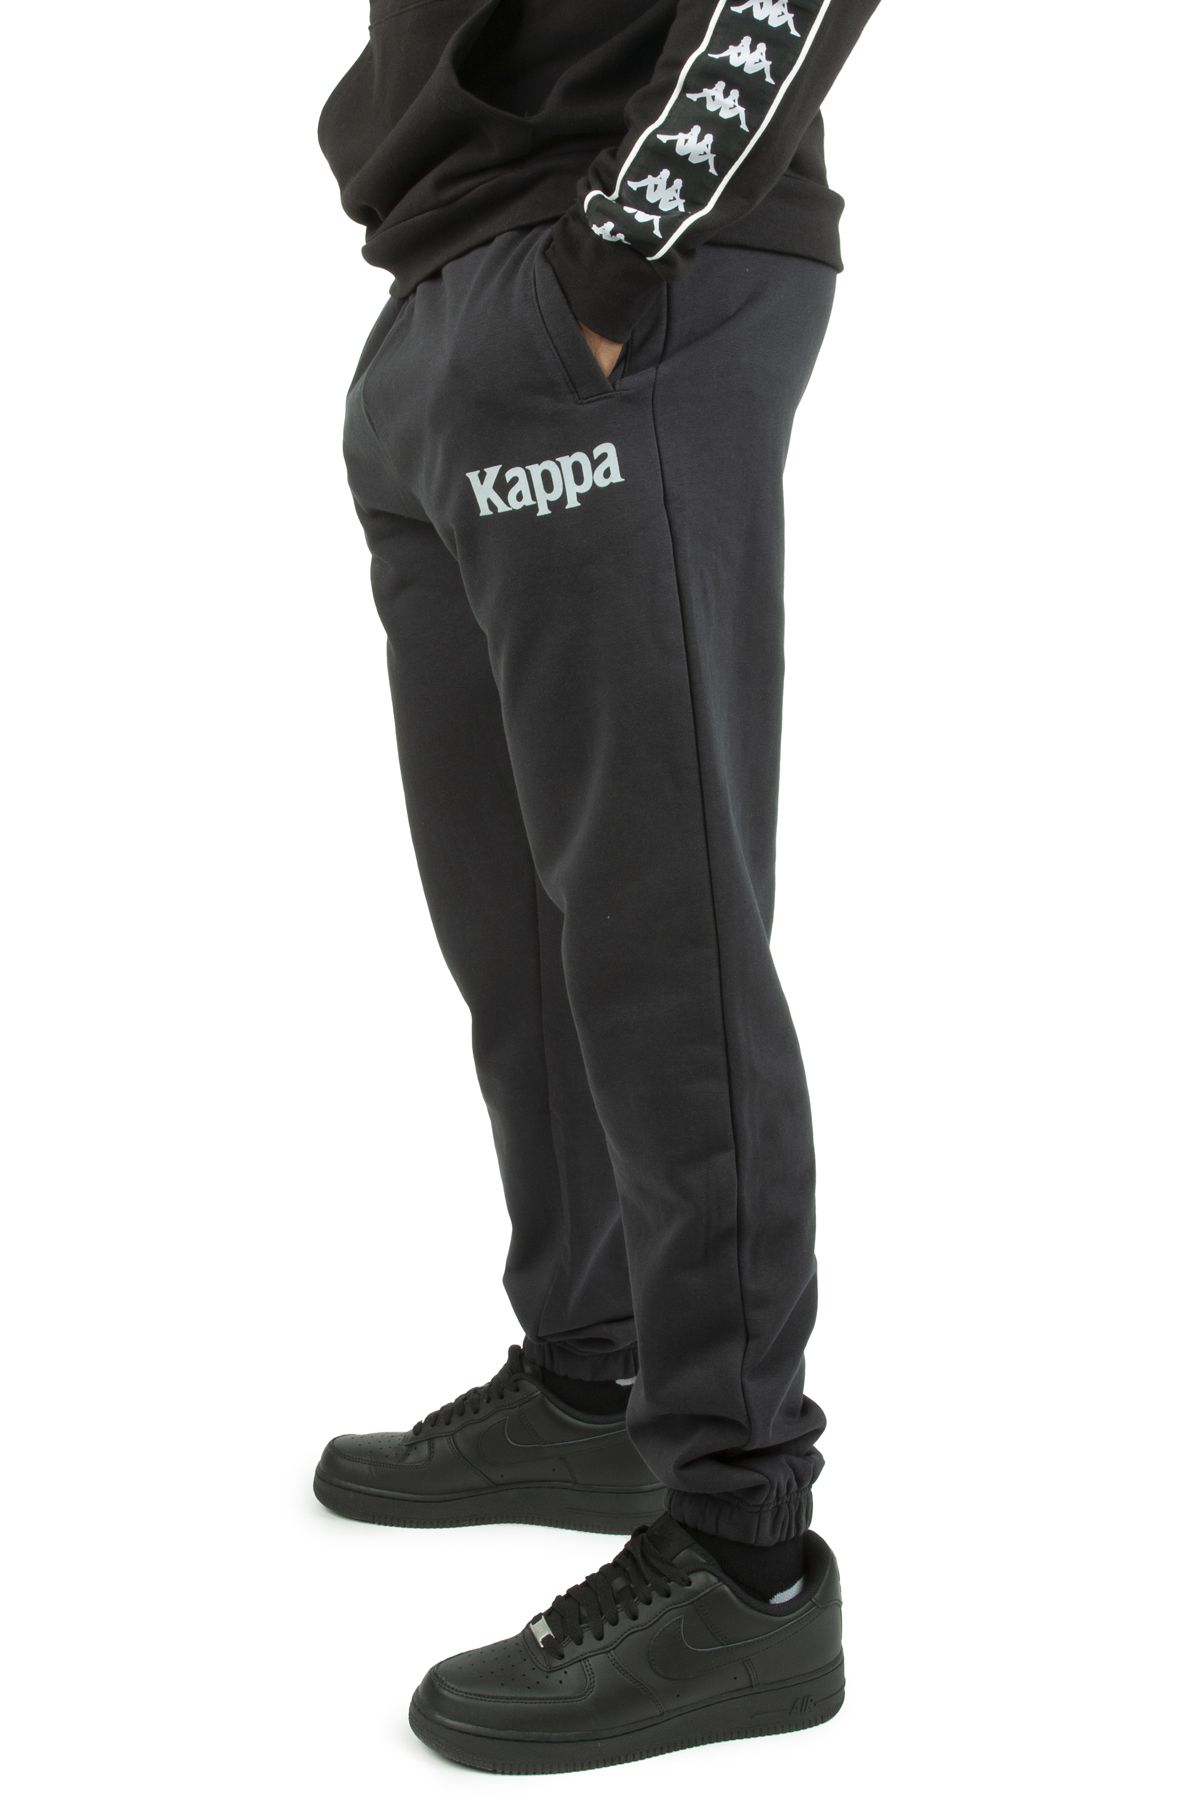 KAPPA Authentic Coevorden Sweatpants 33167KW-088 - Shiekh